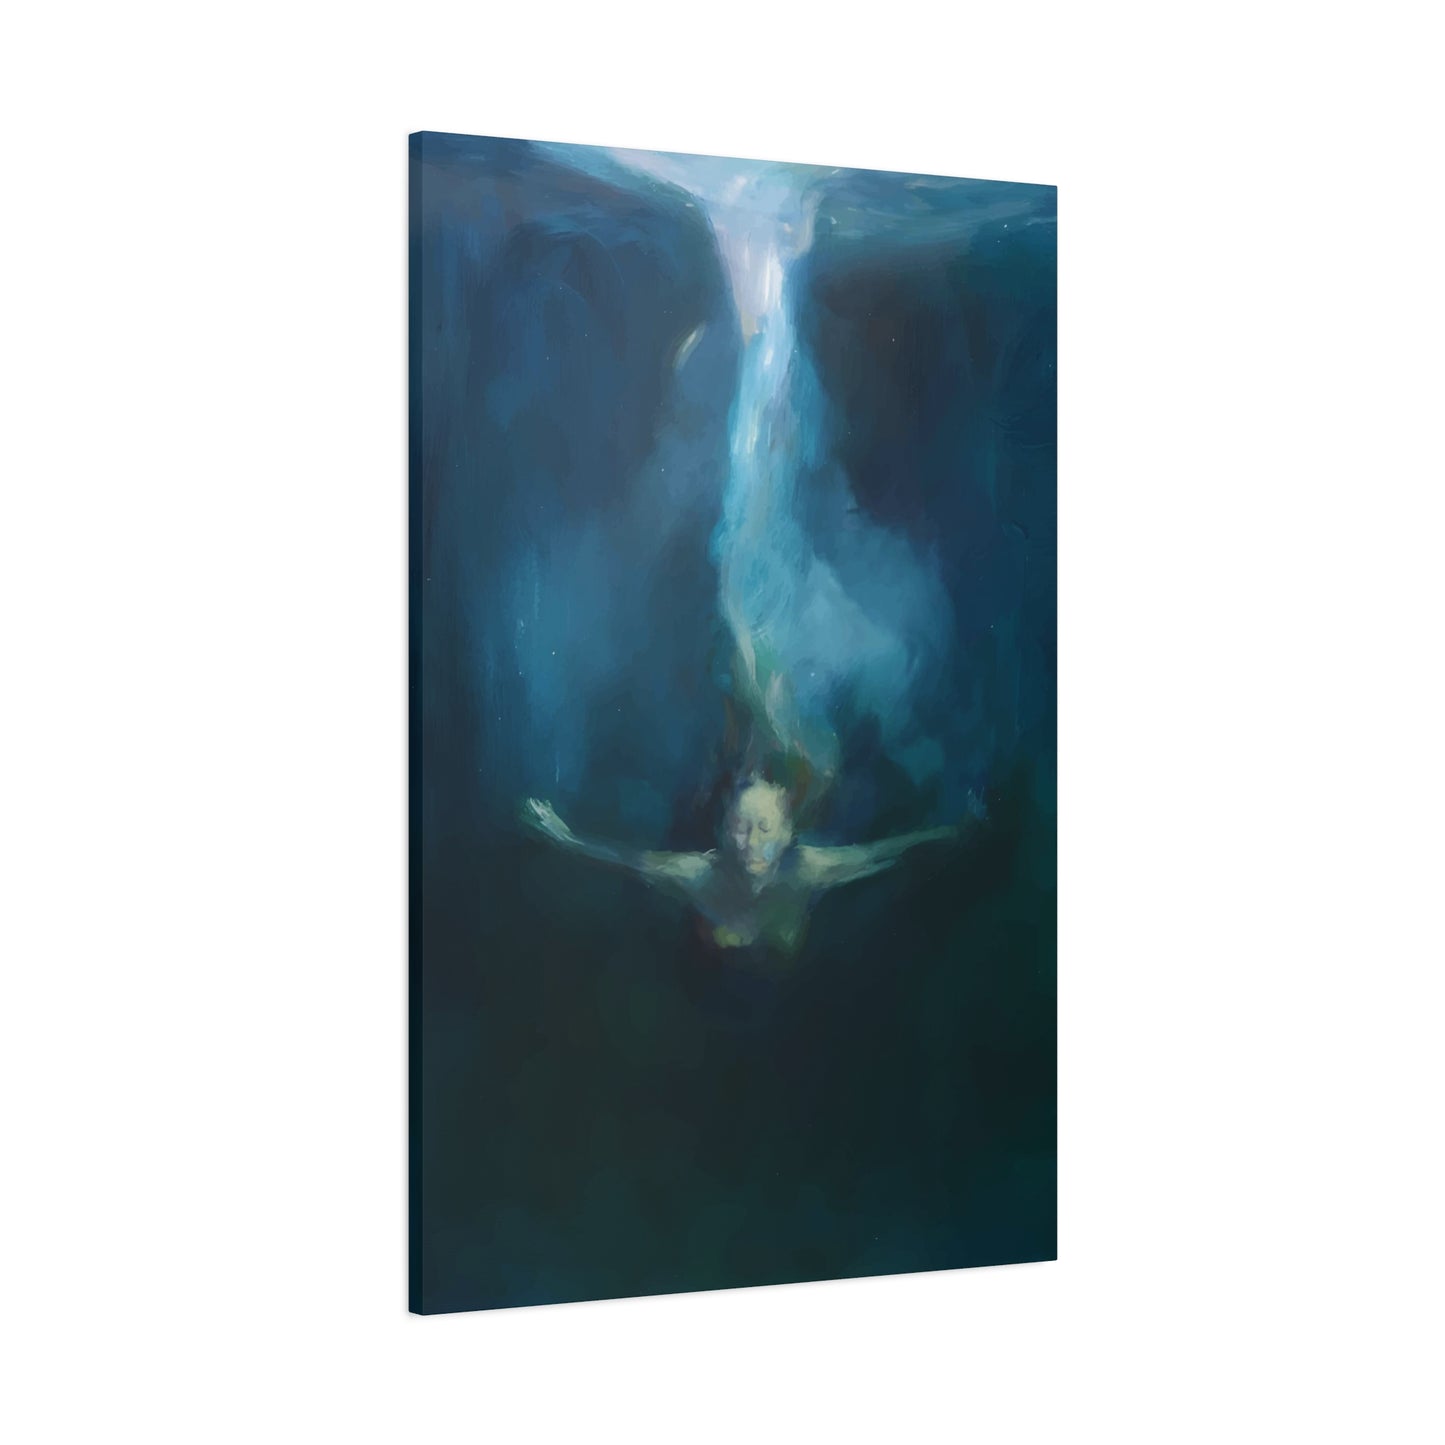 Underwater Wall Art & Canvas Prints